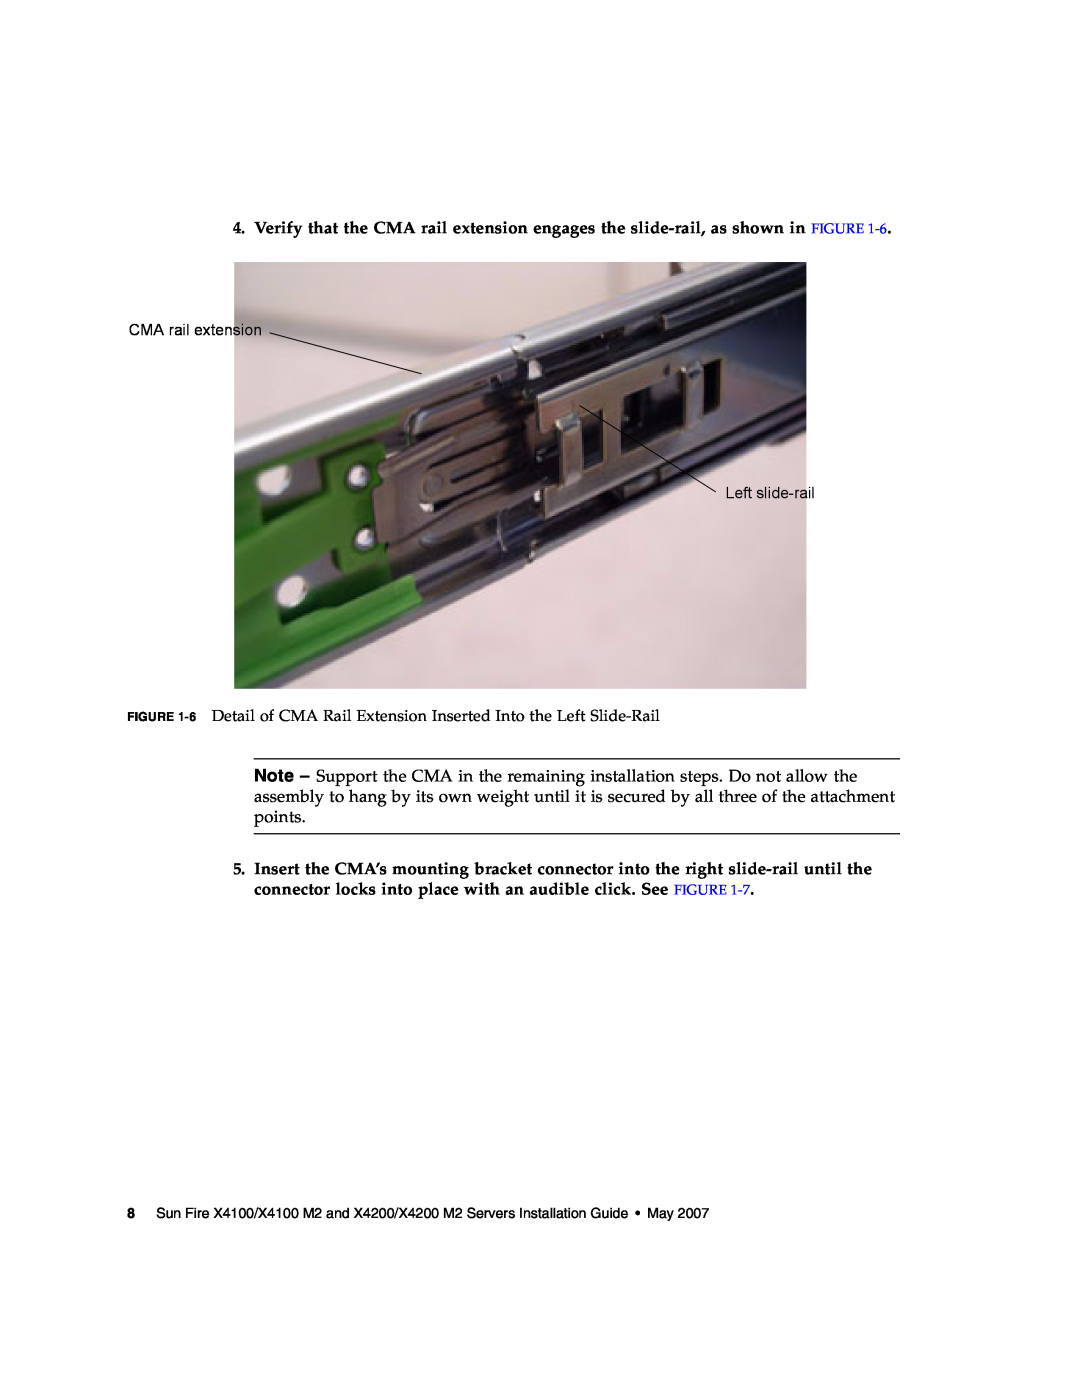 Sun Microsystems X4200 M2, X4100 M2 manual CMA rail extension Left slide-rail 